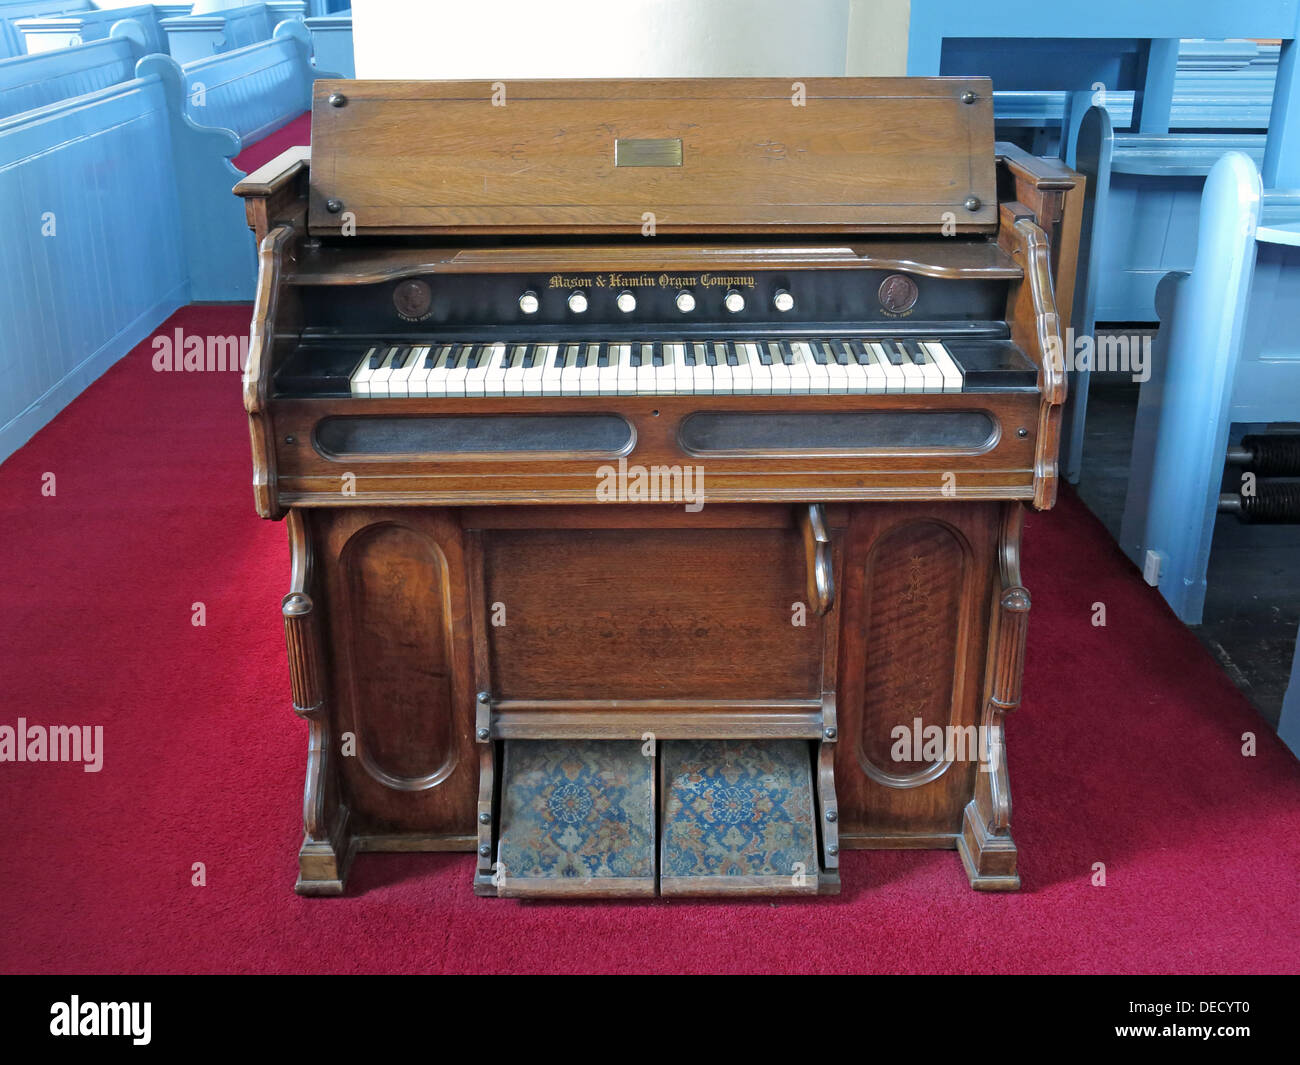 Mason Hamlin Organ at Edinburgh Canongate Kirk, Scotland, UK Stock Photo